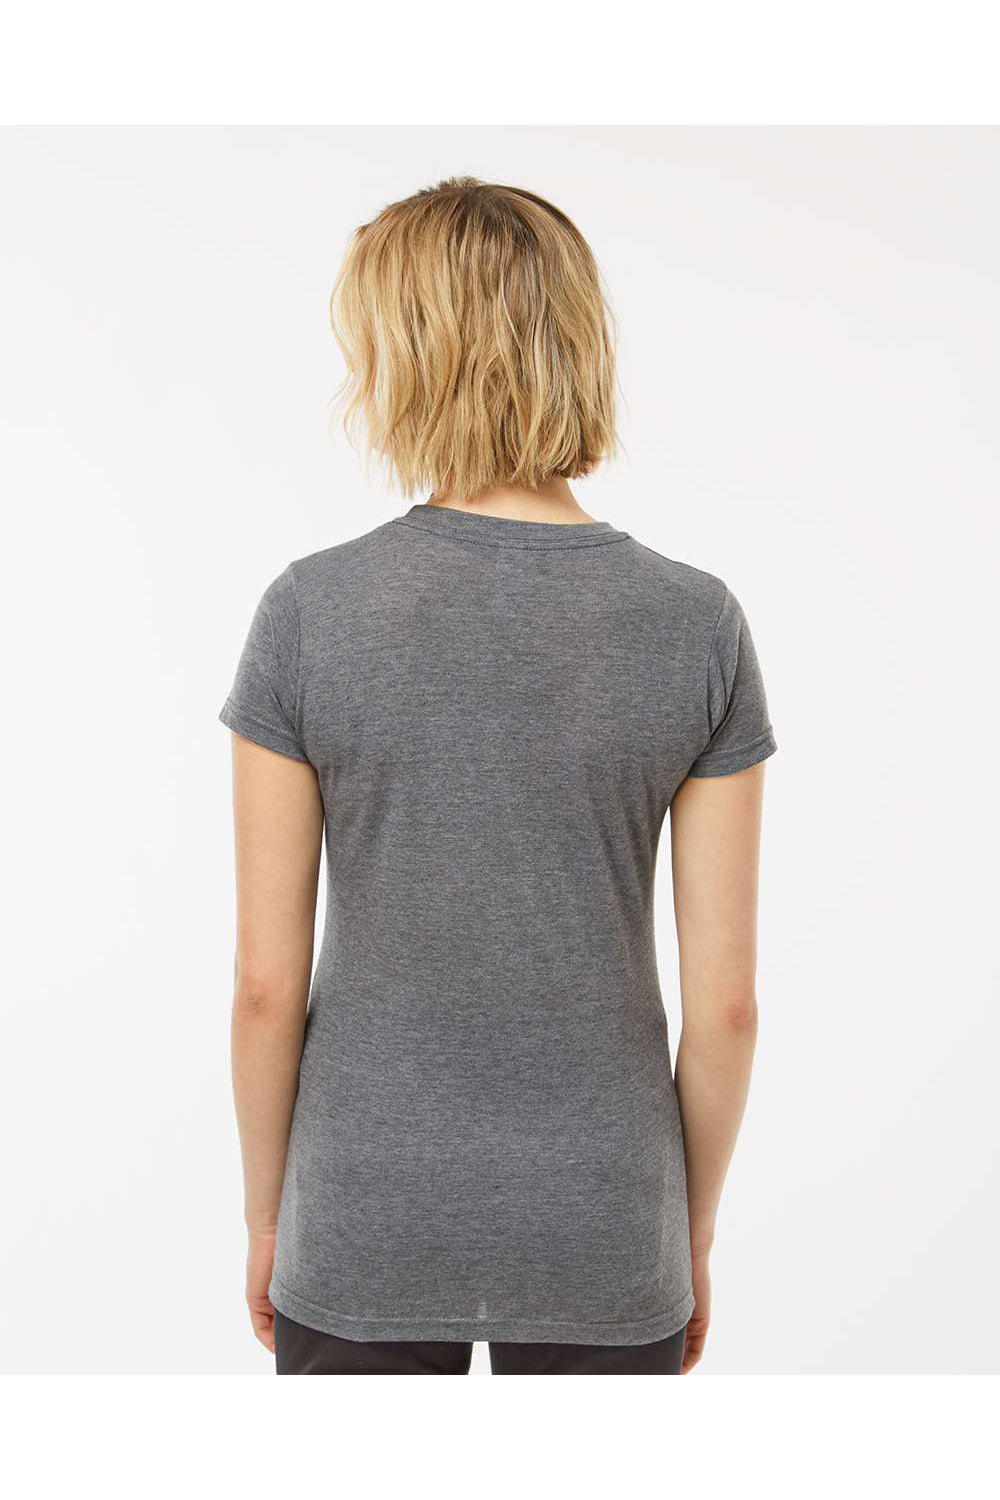 Tultex 240 Womens Poly-Rich Short Sleeve Crewneck T-Shirt Heather Charcoal Grey Model Back